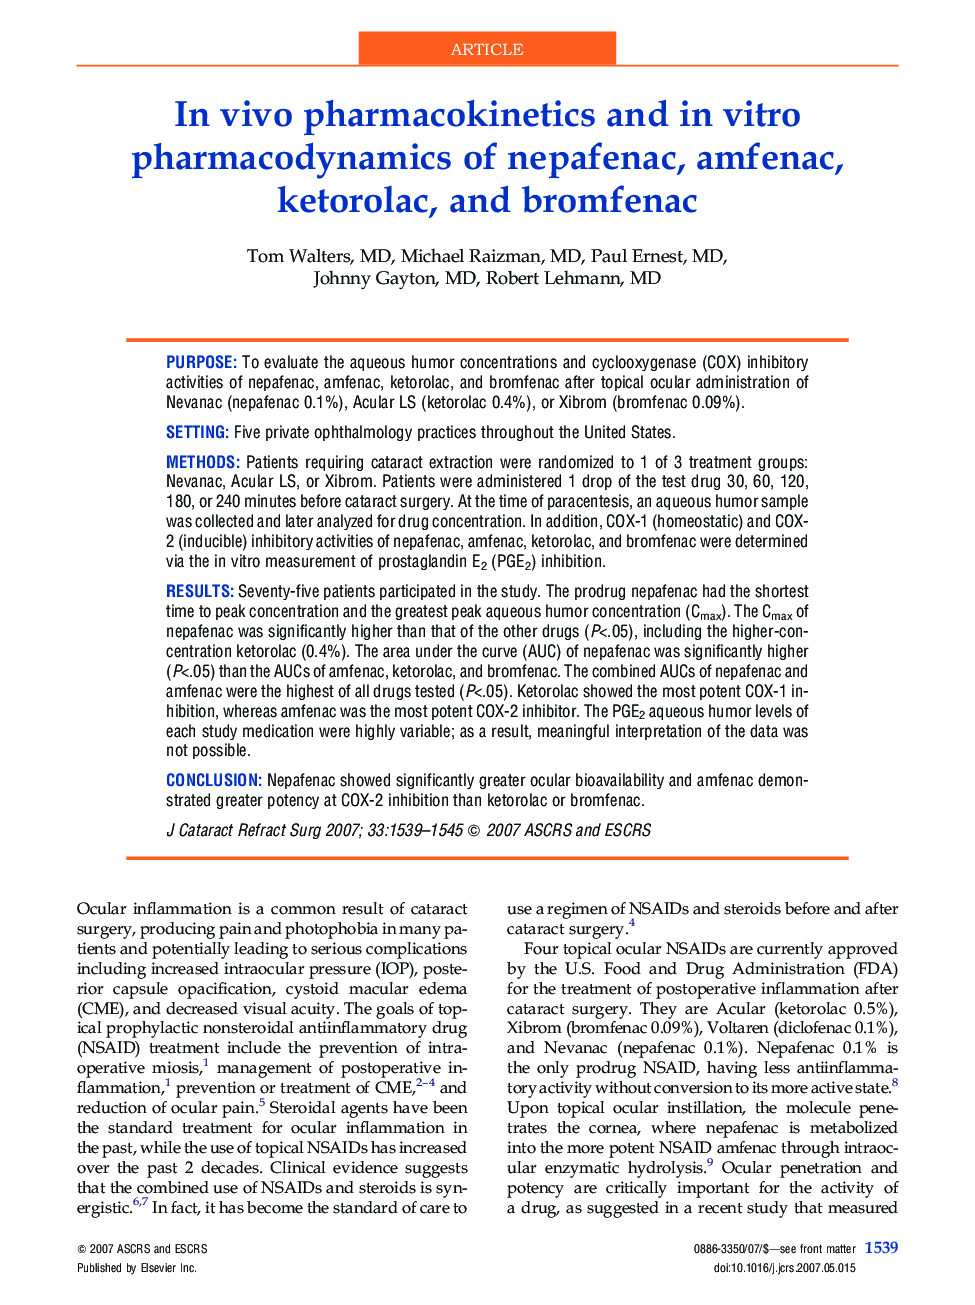 In vivo pharmacokinetics and in vitro pharmacodynamics of nepafenac, amfenac, ketorolac, and bromfenac